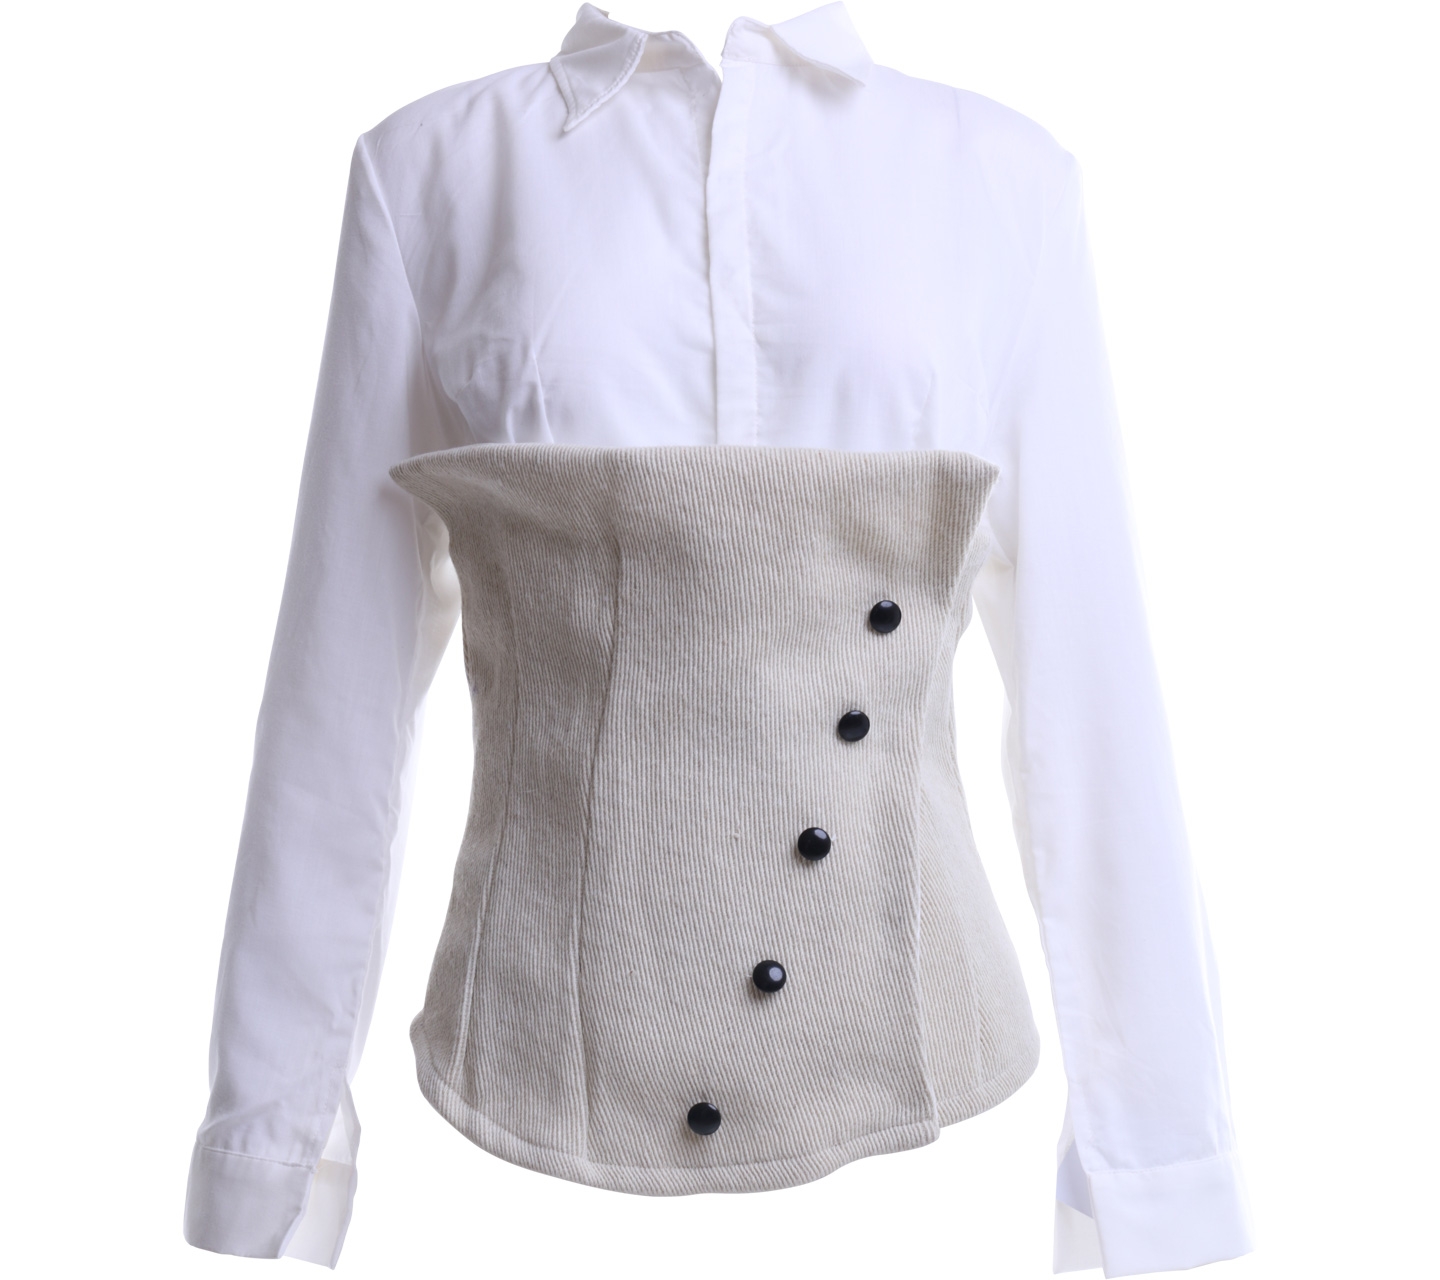 Alto White Long Sleeve with Corset Shirt